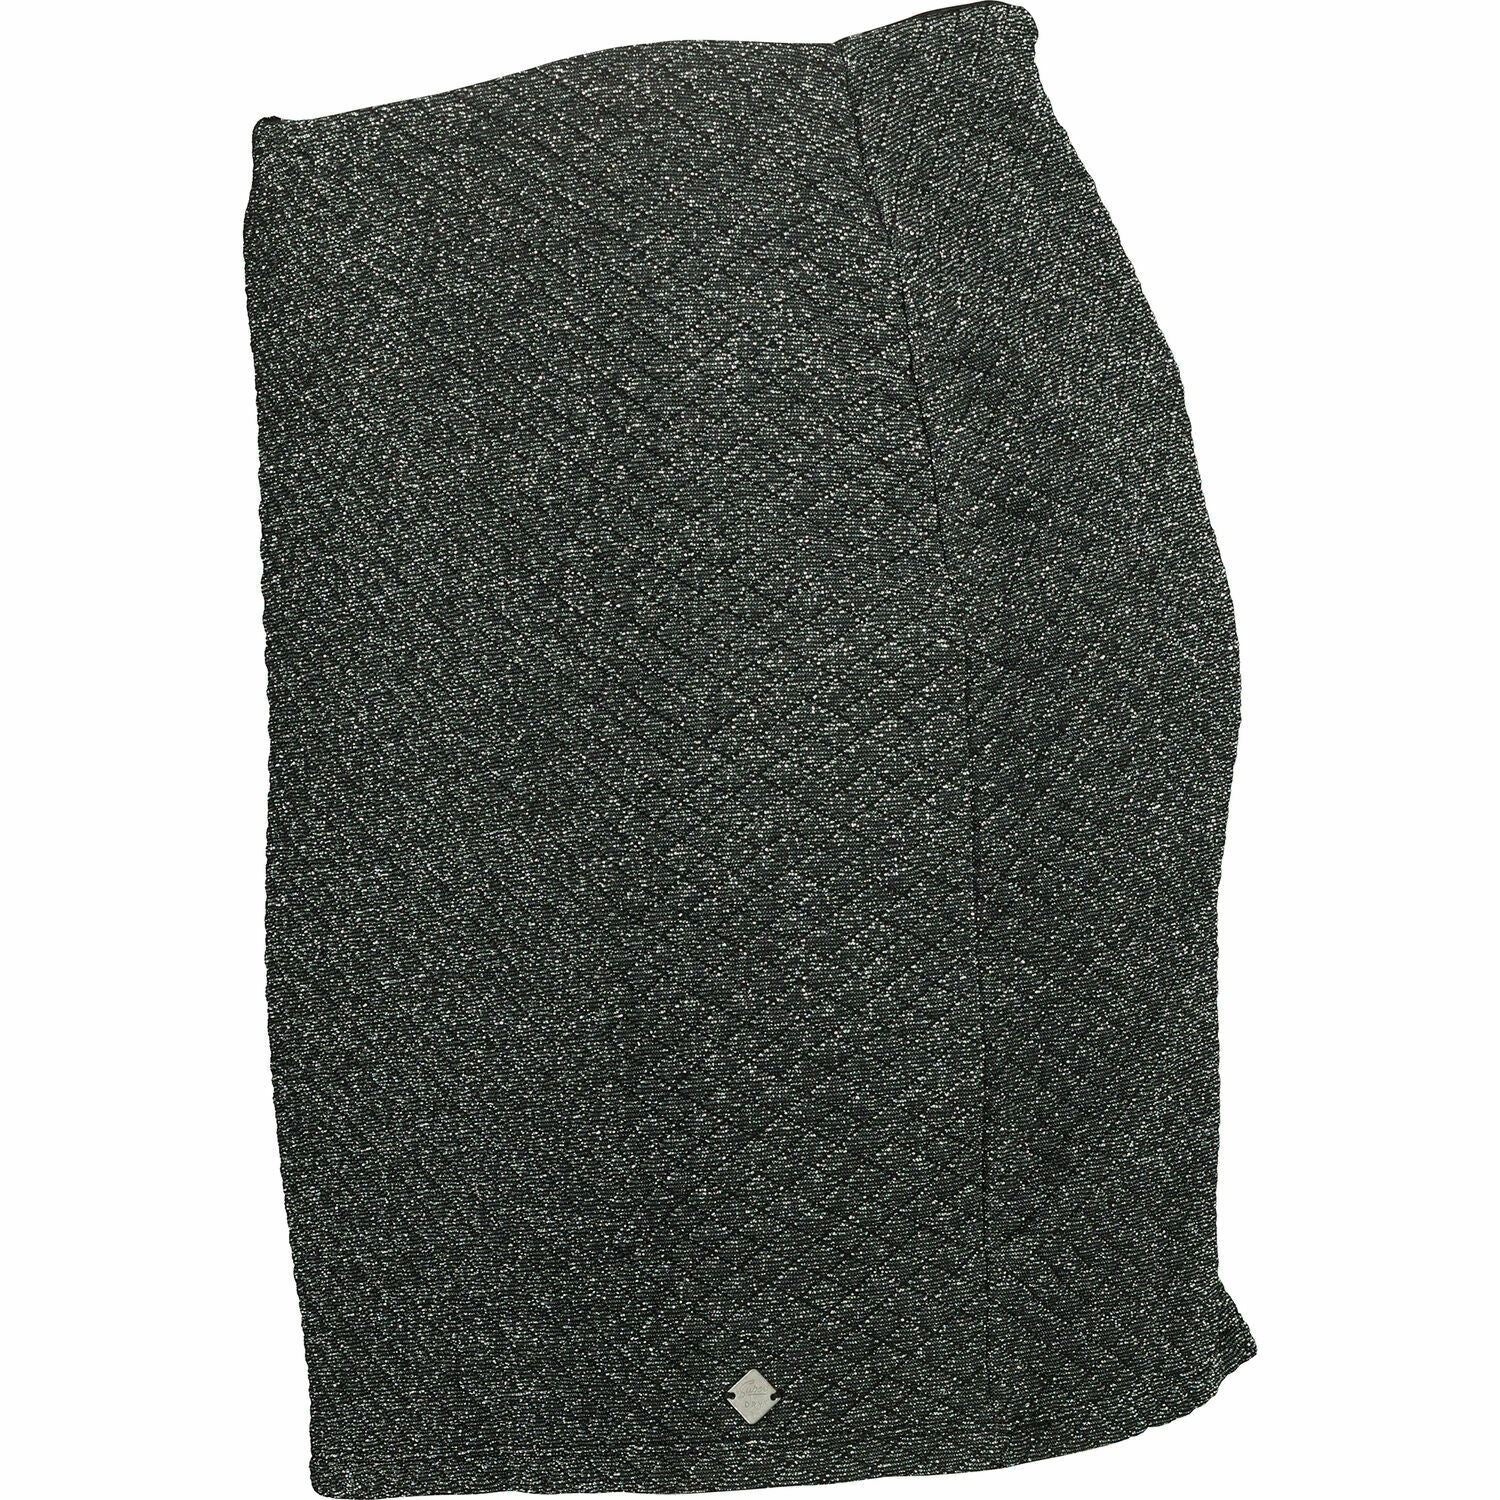 SUPERDRY Women's EDISON Black/Silver Sparkle Mini Skirt, size S / UK 10